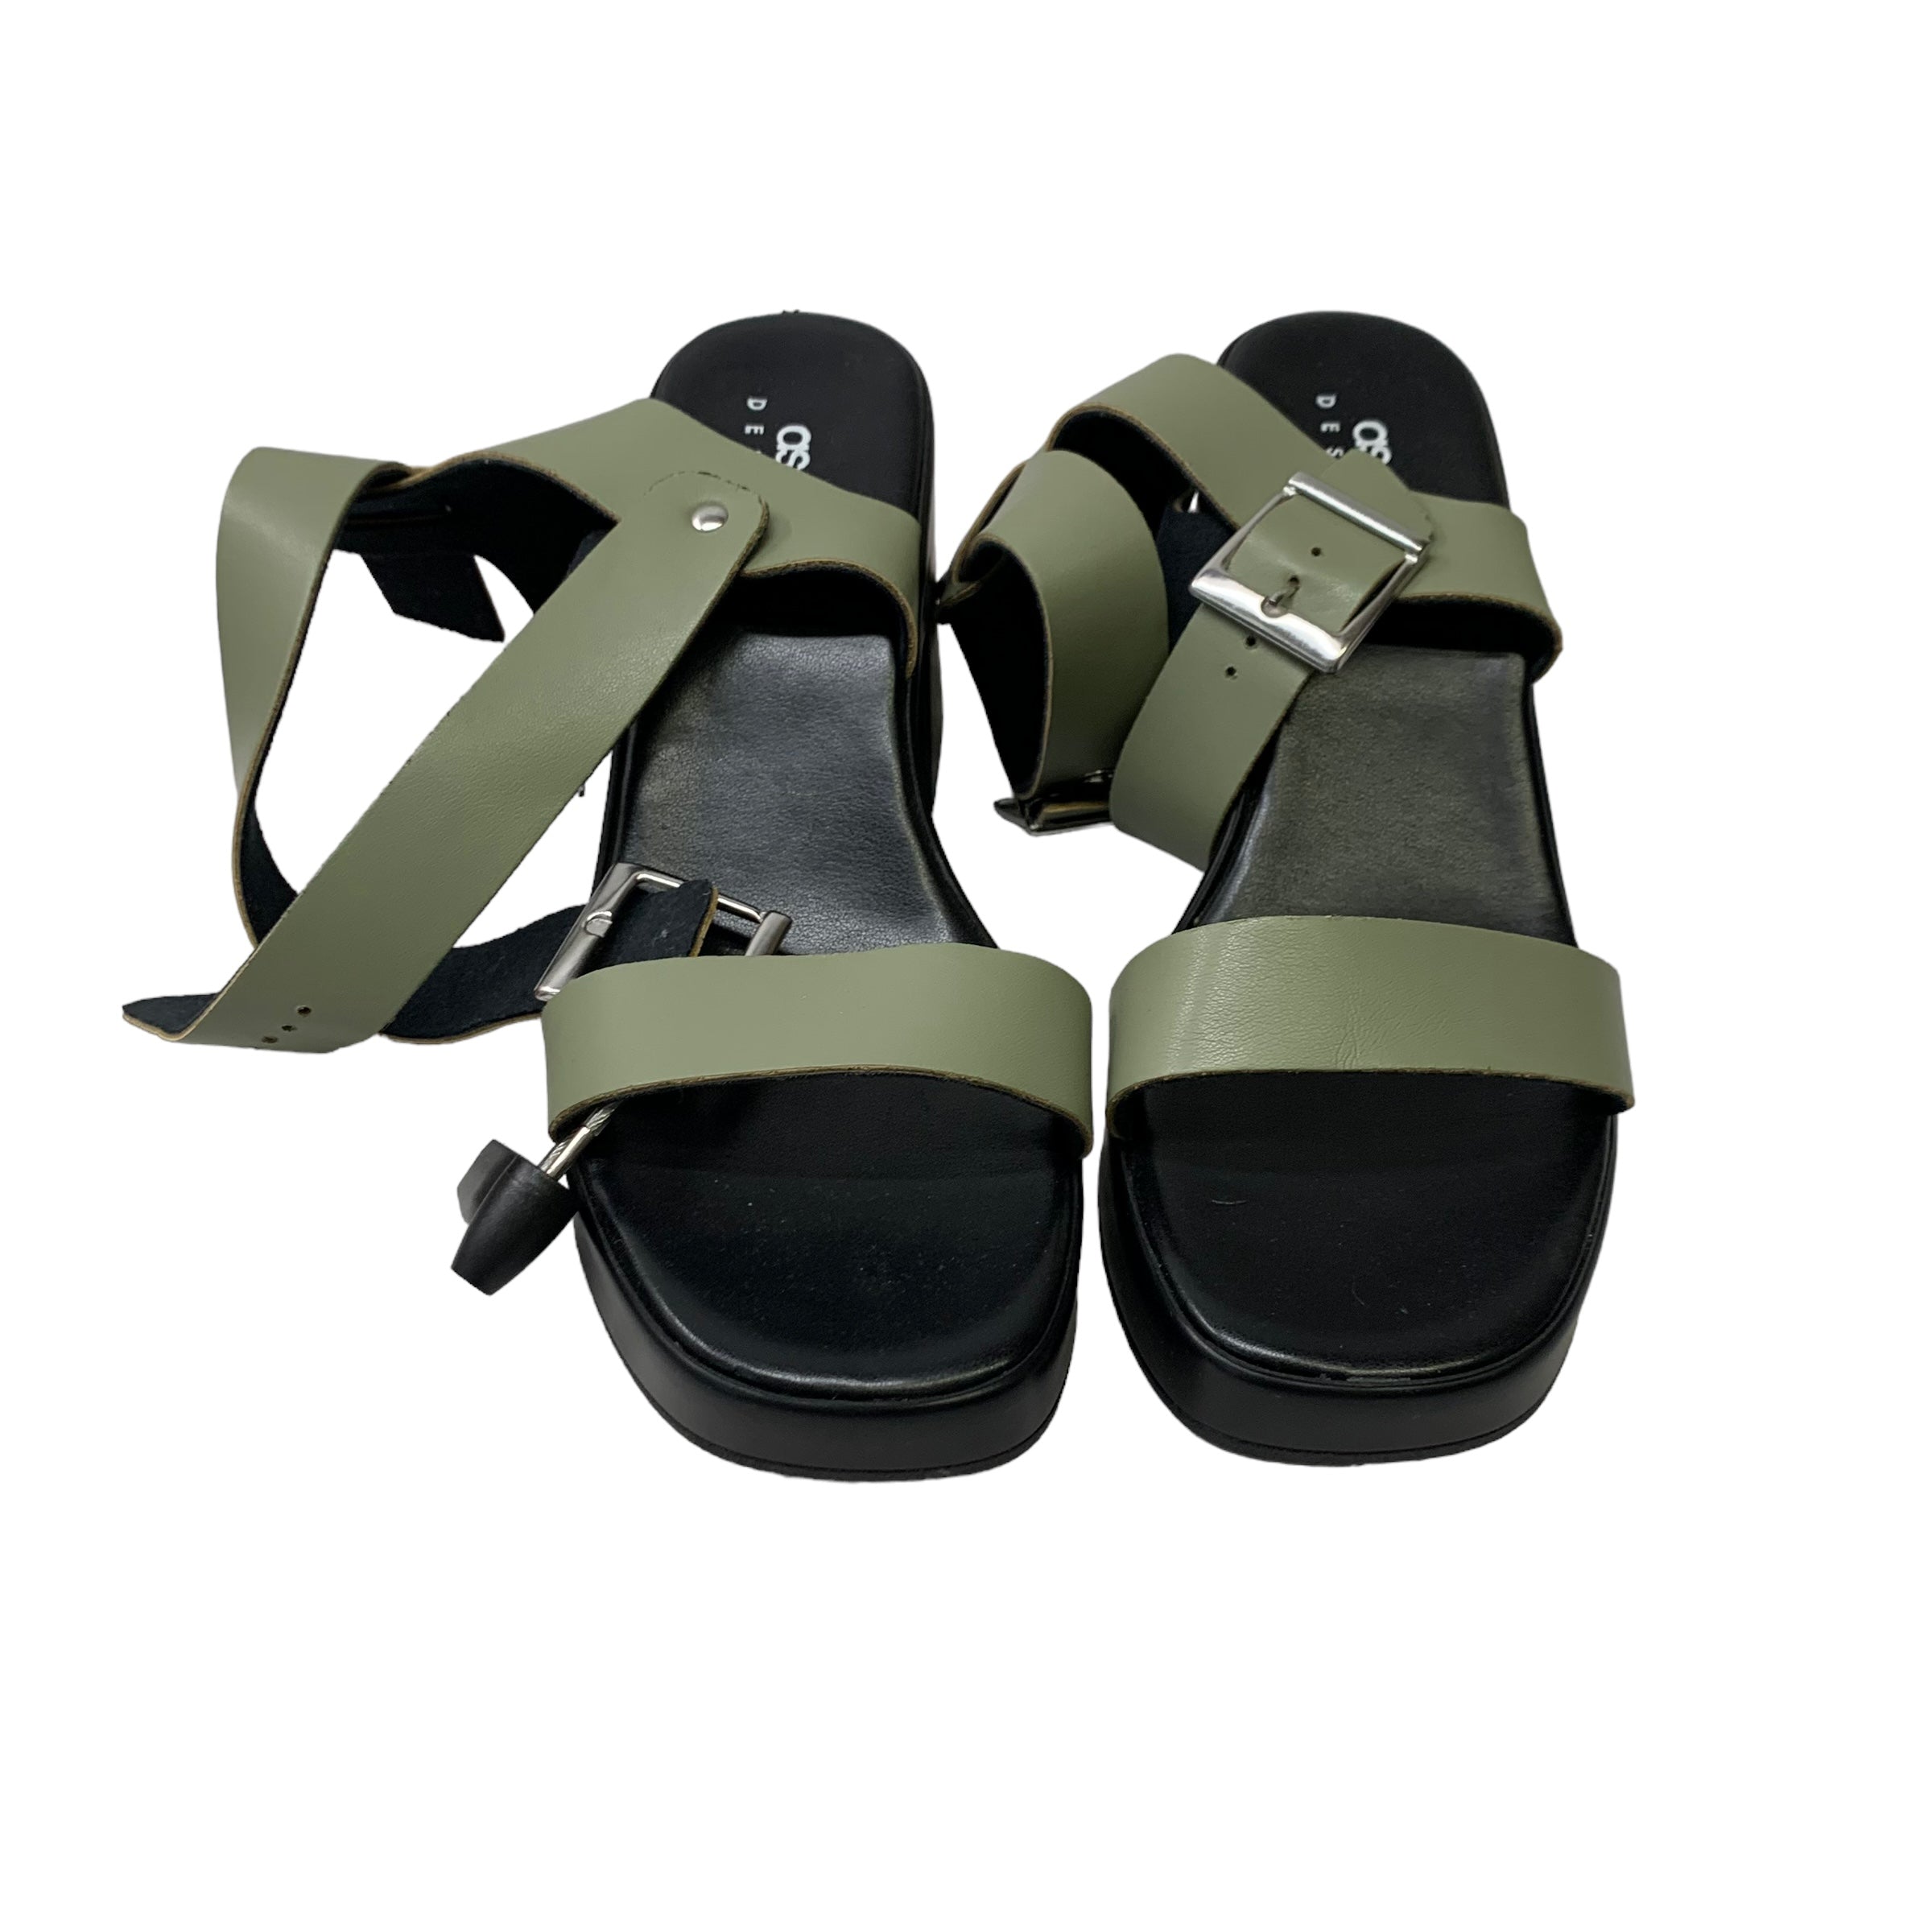 ALDO UK | ALDO Shoes, Boots, Sandals, Handbags & Accessories